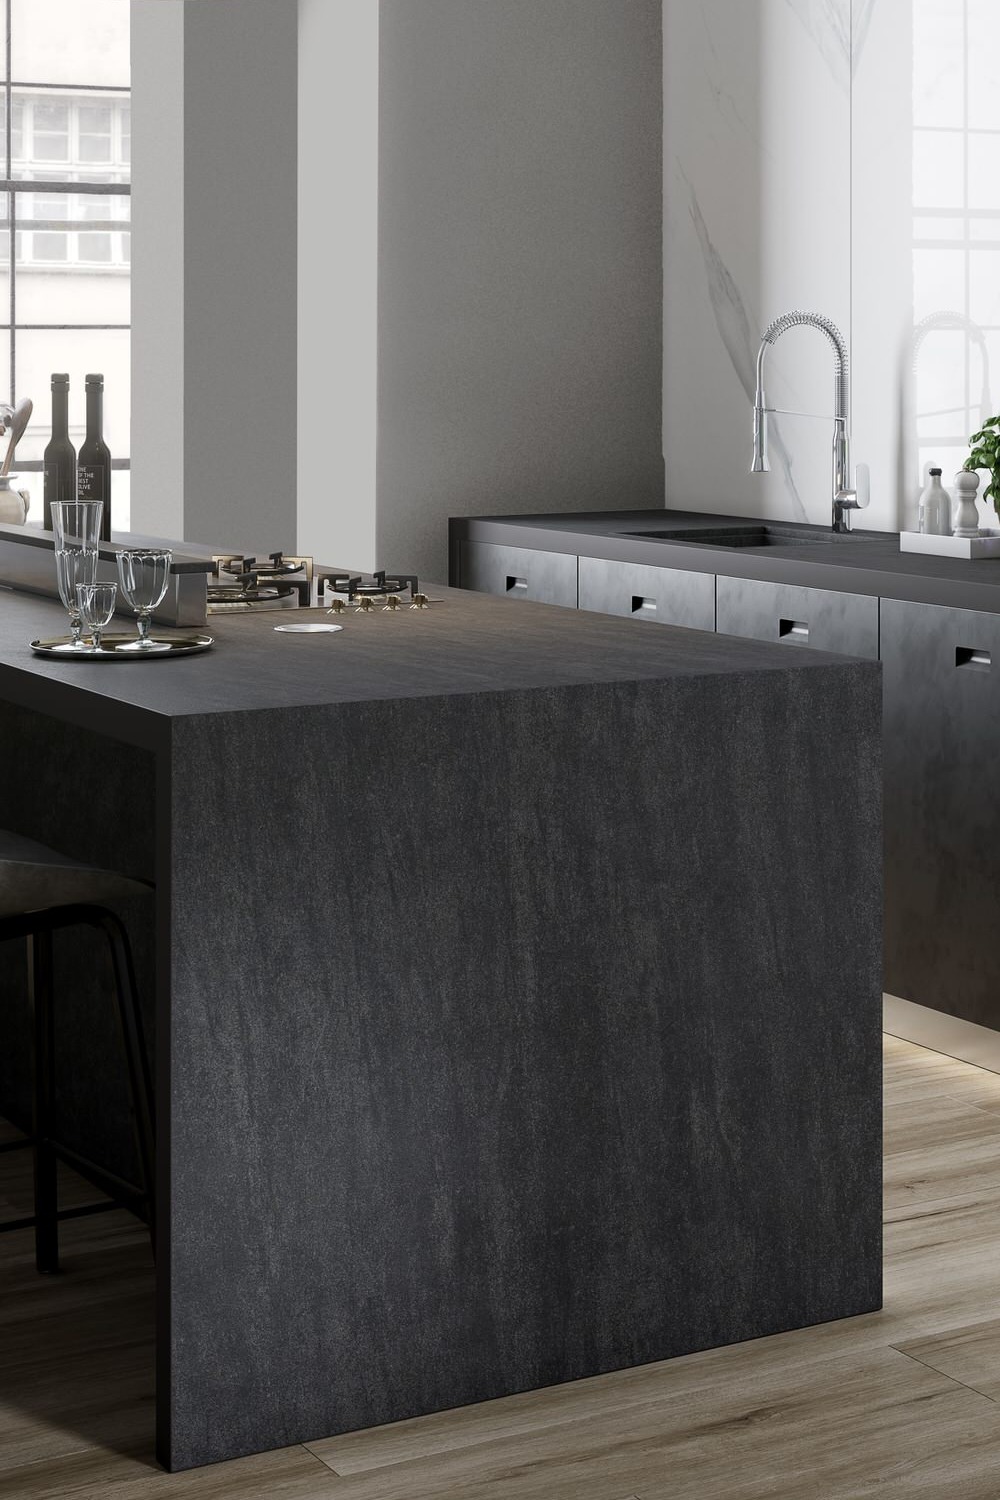 Cosentino Dekton Kitchen Counters Range Includes Solid Colors Other Countertop Materials